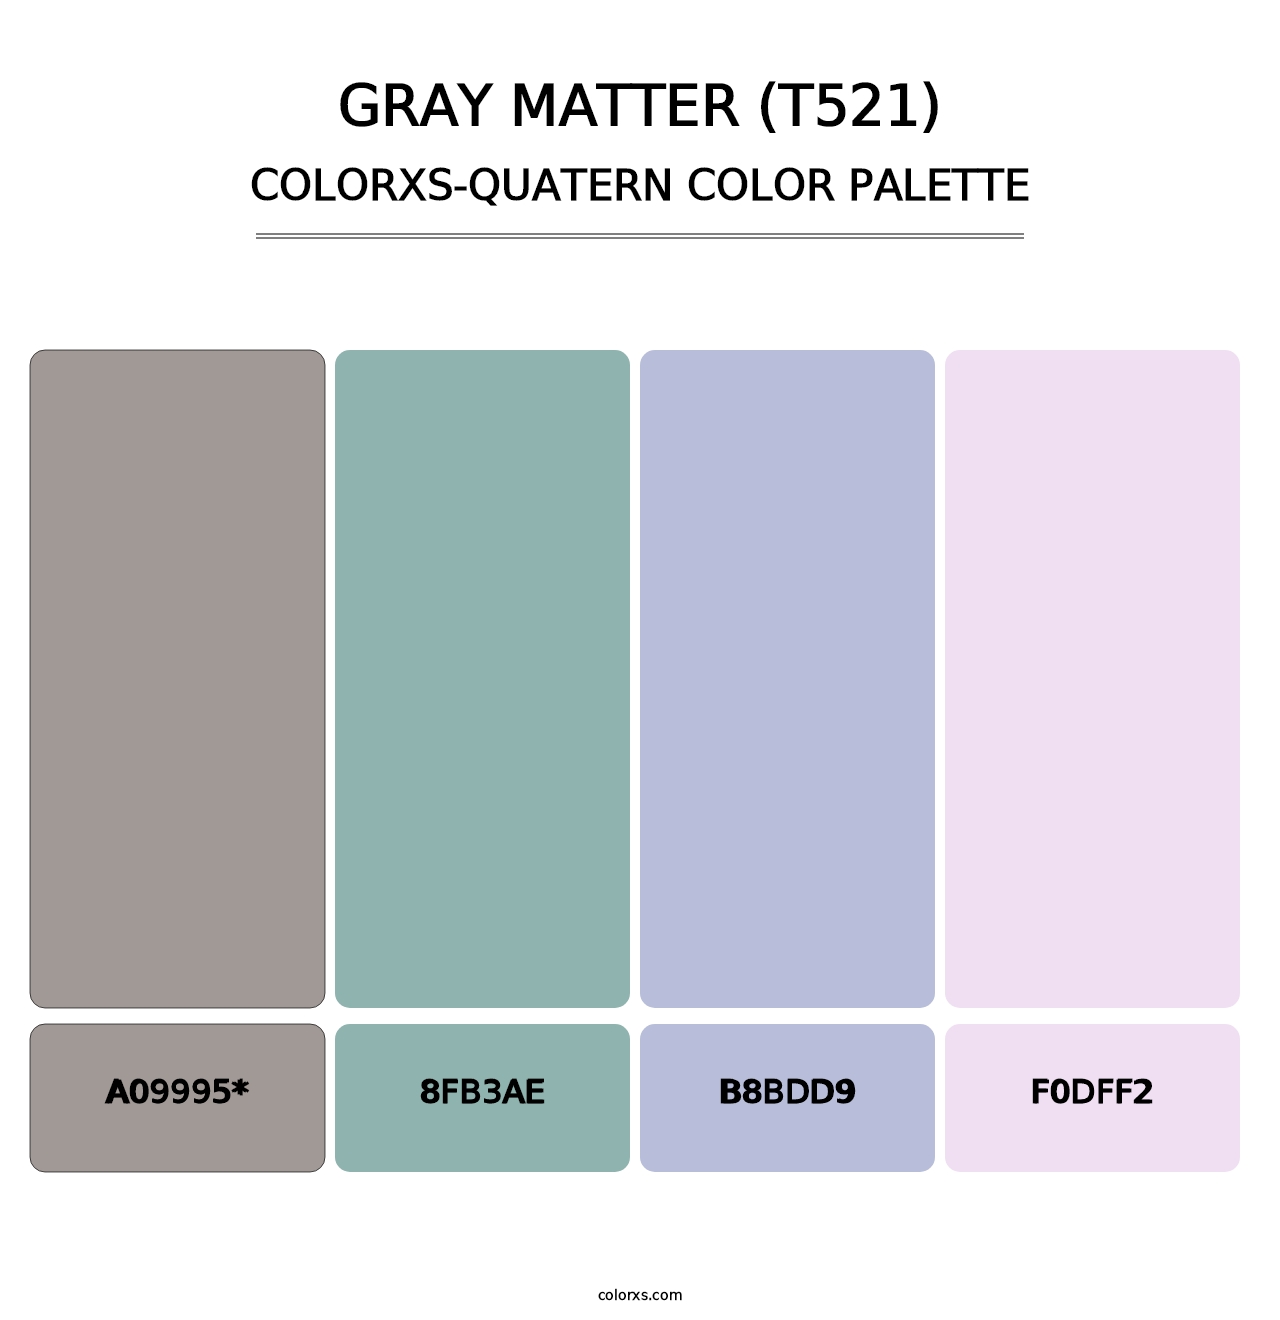 Gray Matter (T521) - Colorxs Quatern Palette